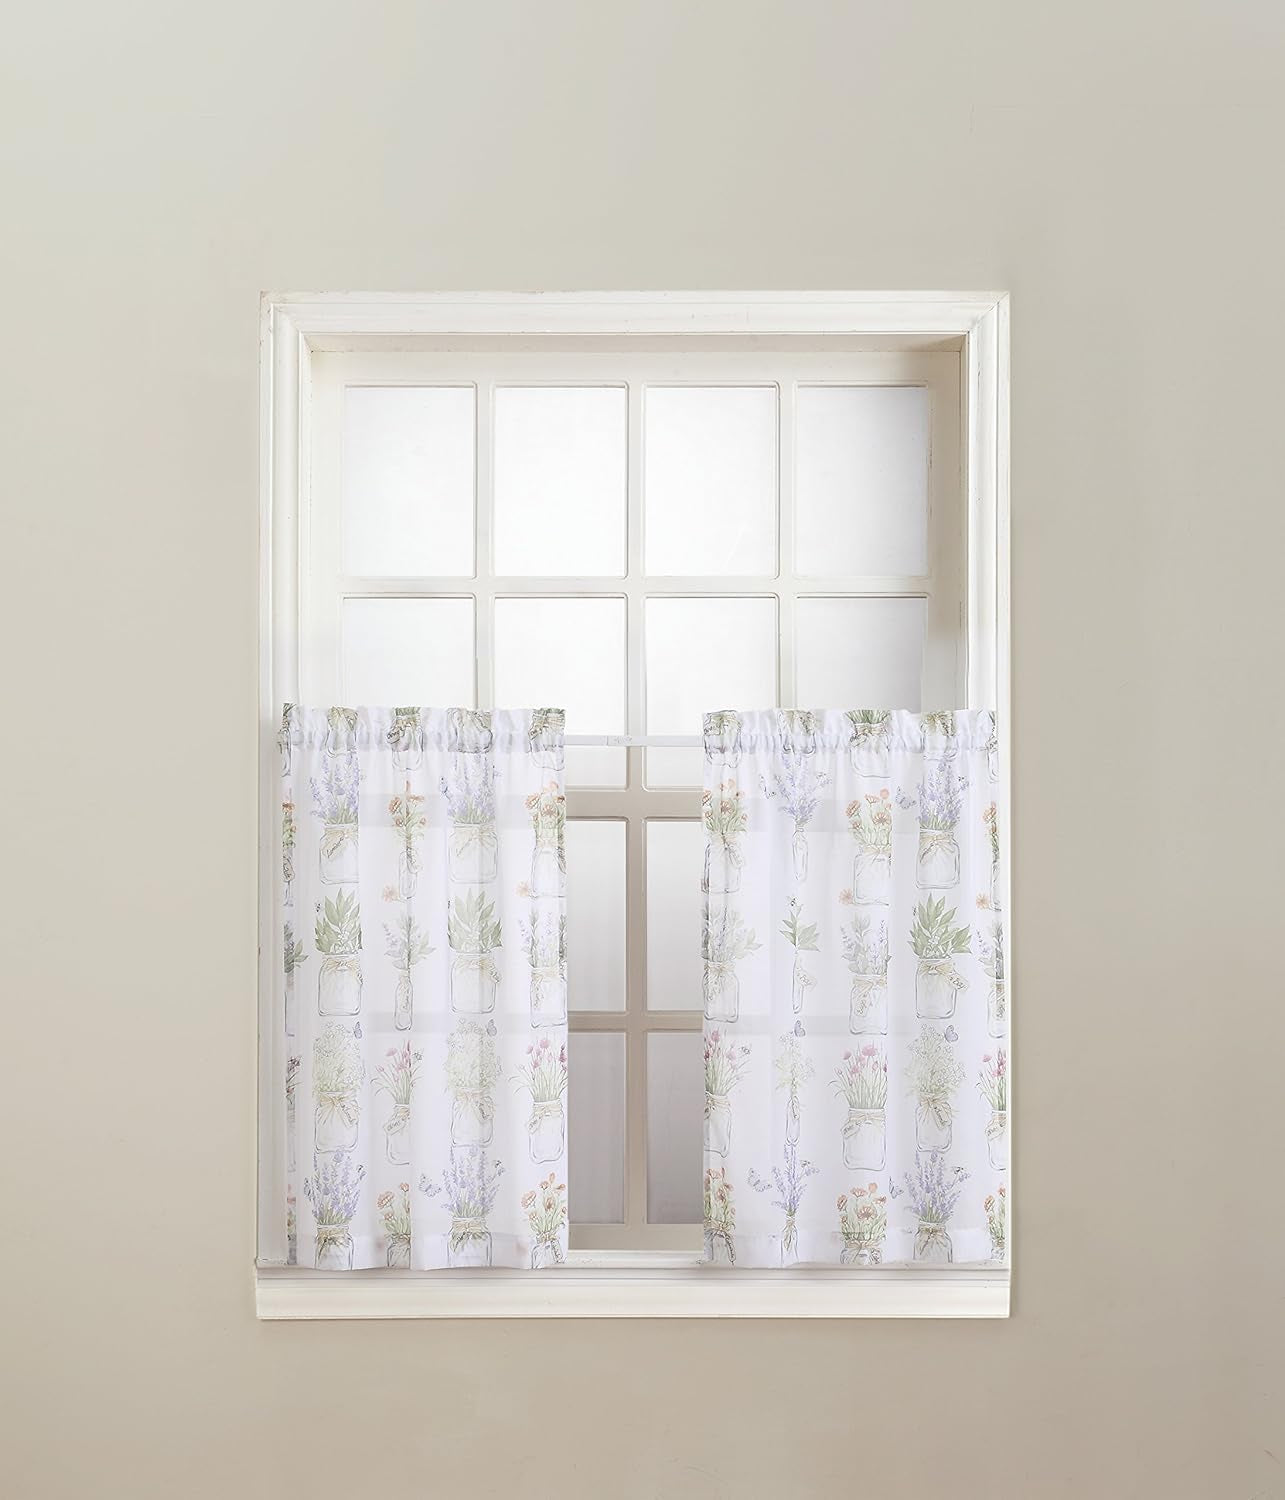 No. 918 Eve'S Garden Semi-Sheer Rod Pocket Kitchen Curtain Tier Pair, 54" X 24", White